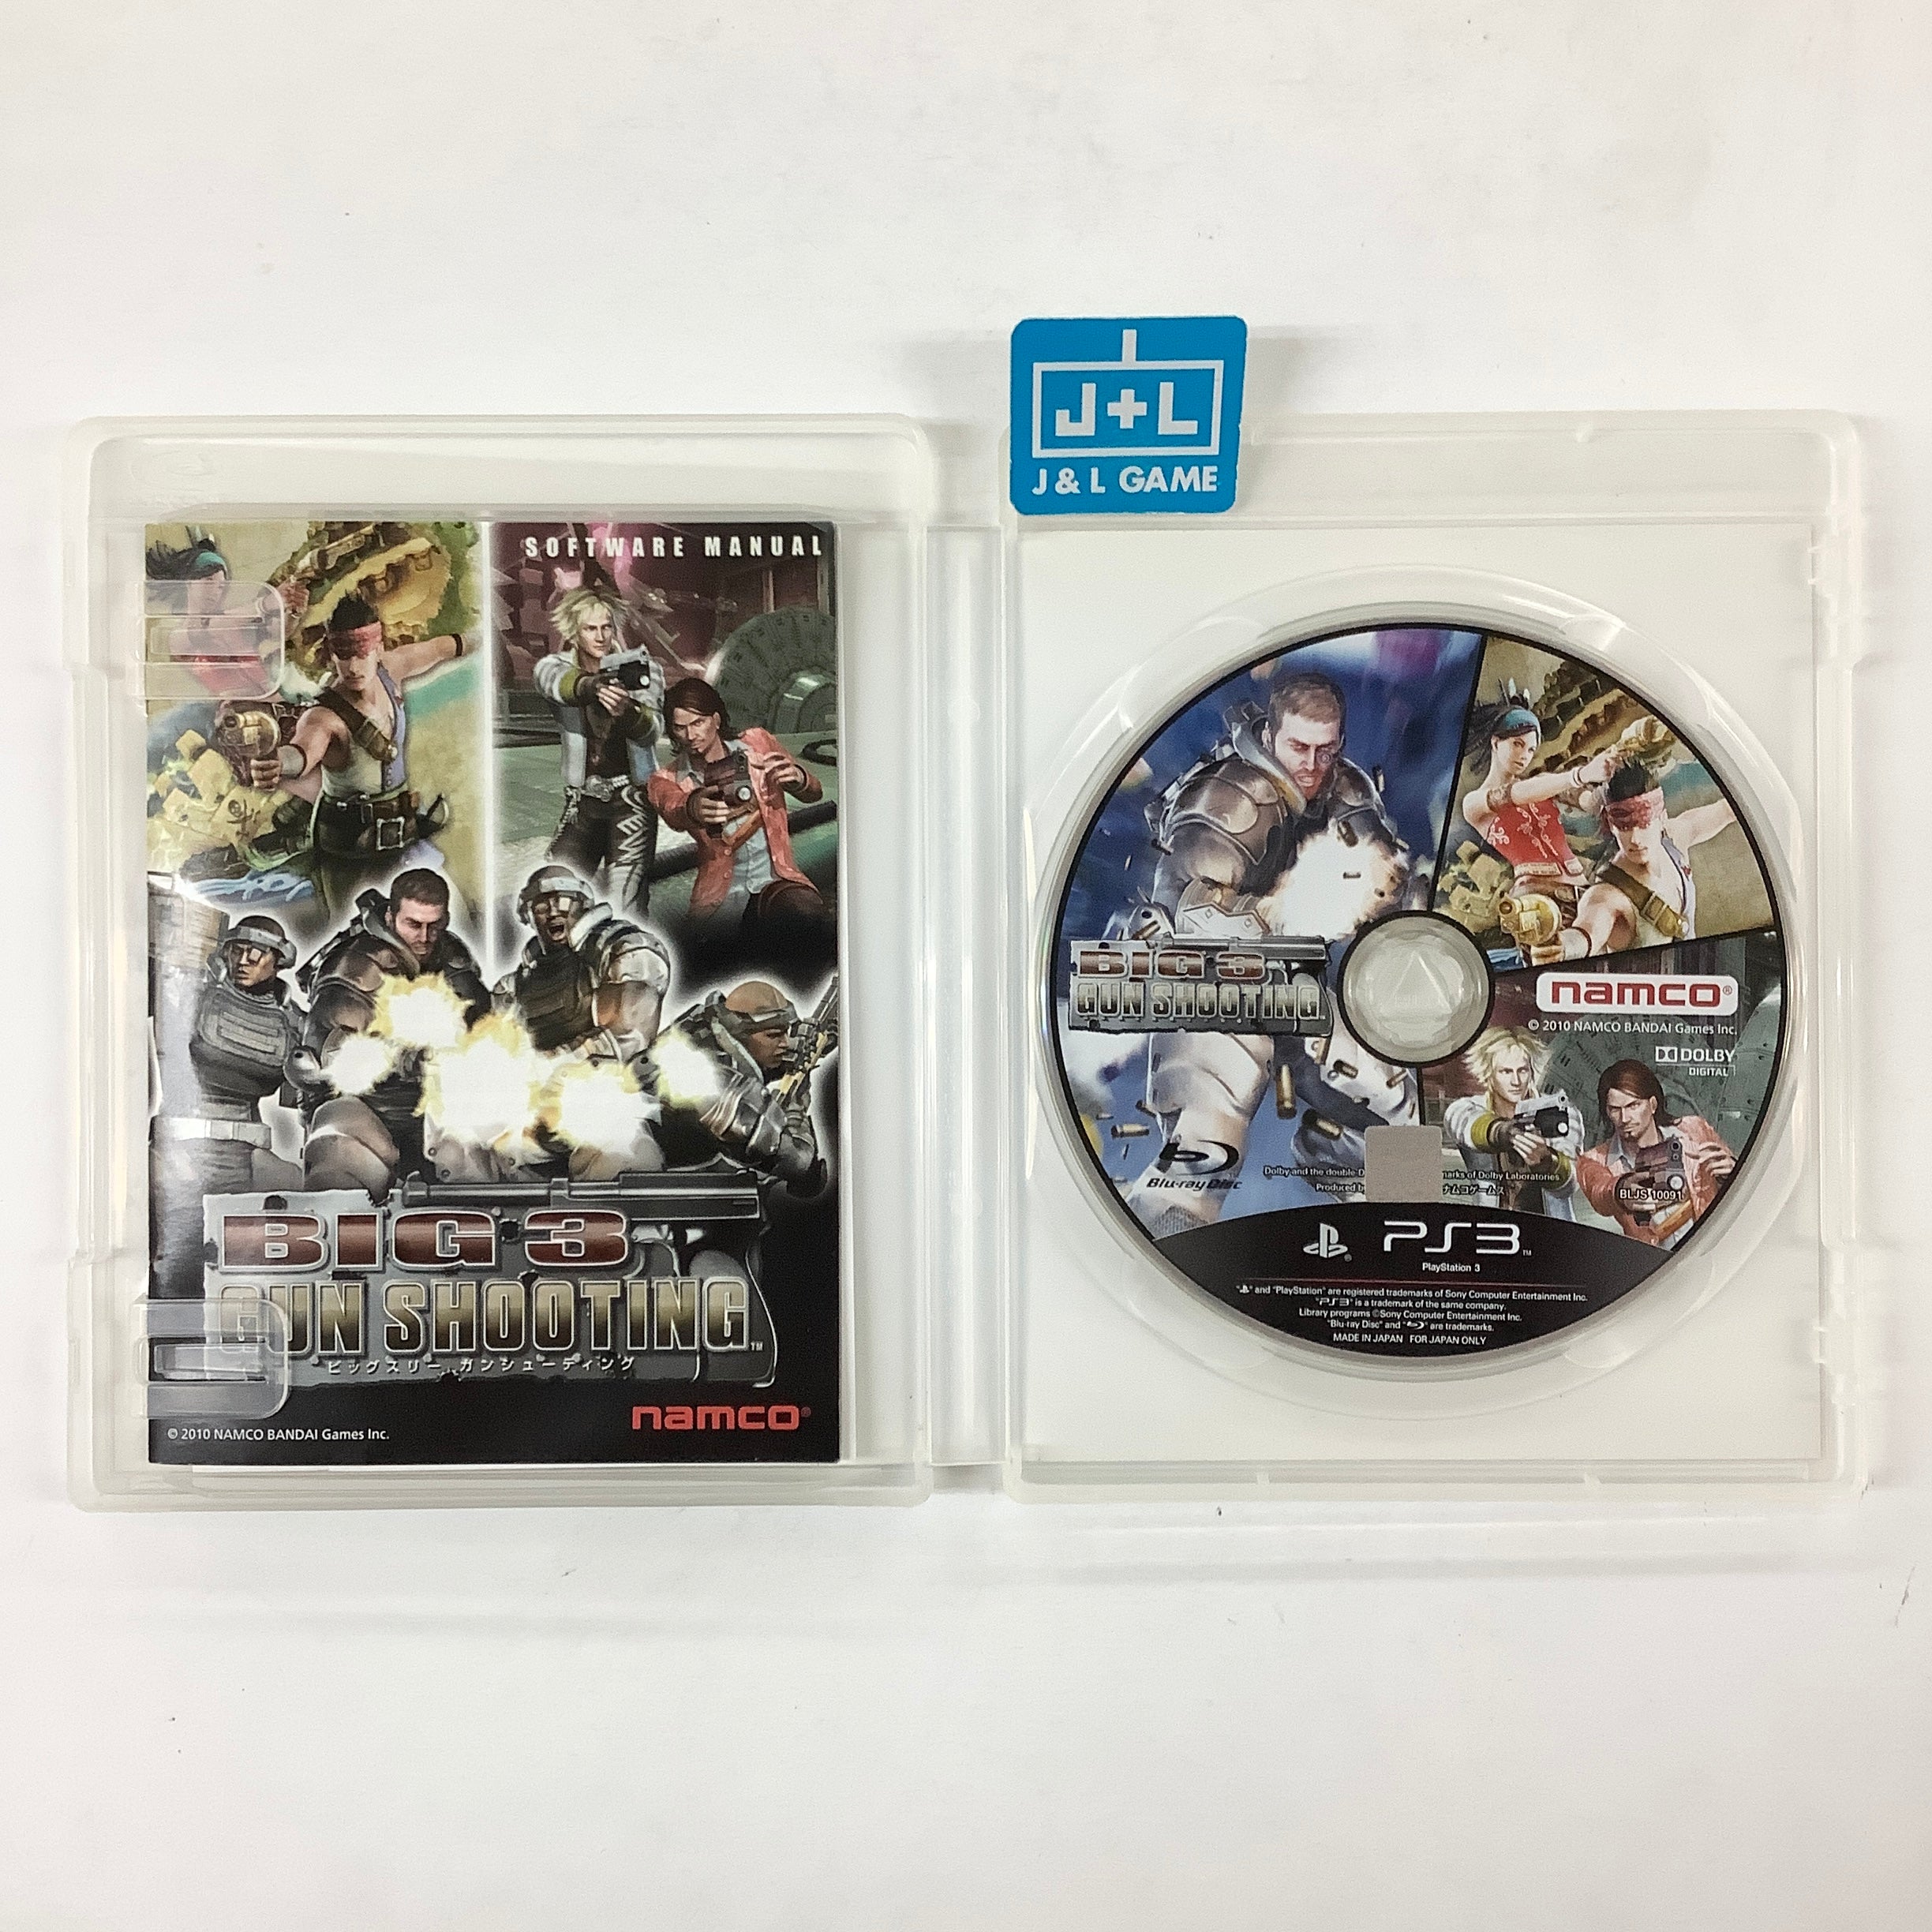 Big 3 Gun Shooting - (PS3) PlayStation 3 [Pre-Owned] (Japanese Import)